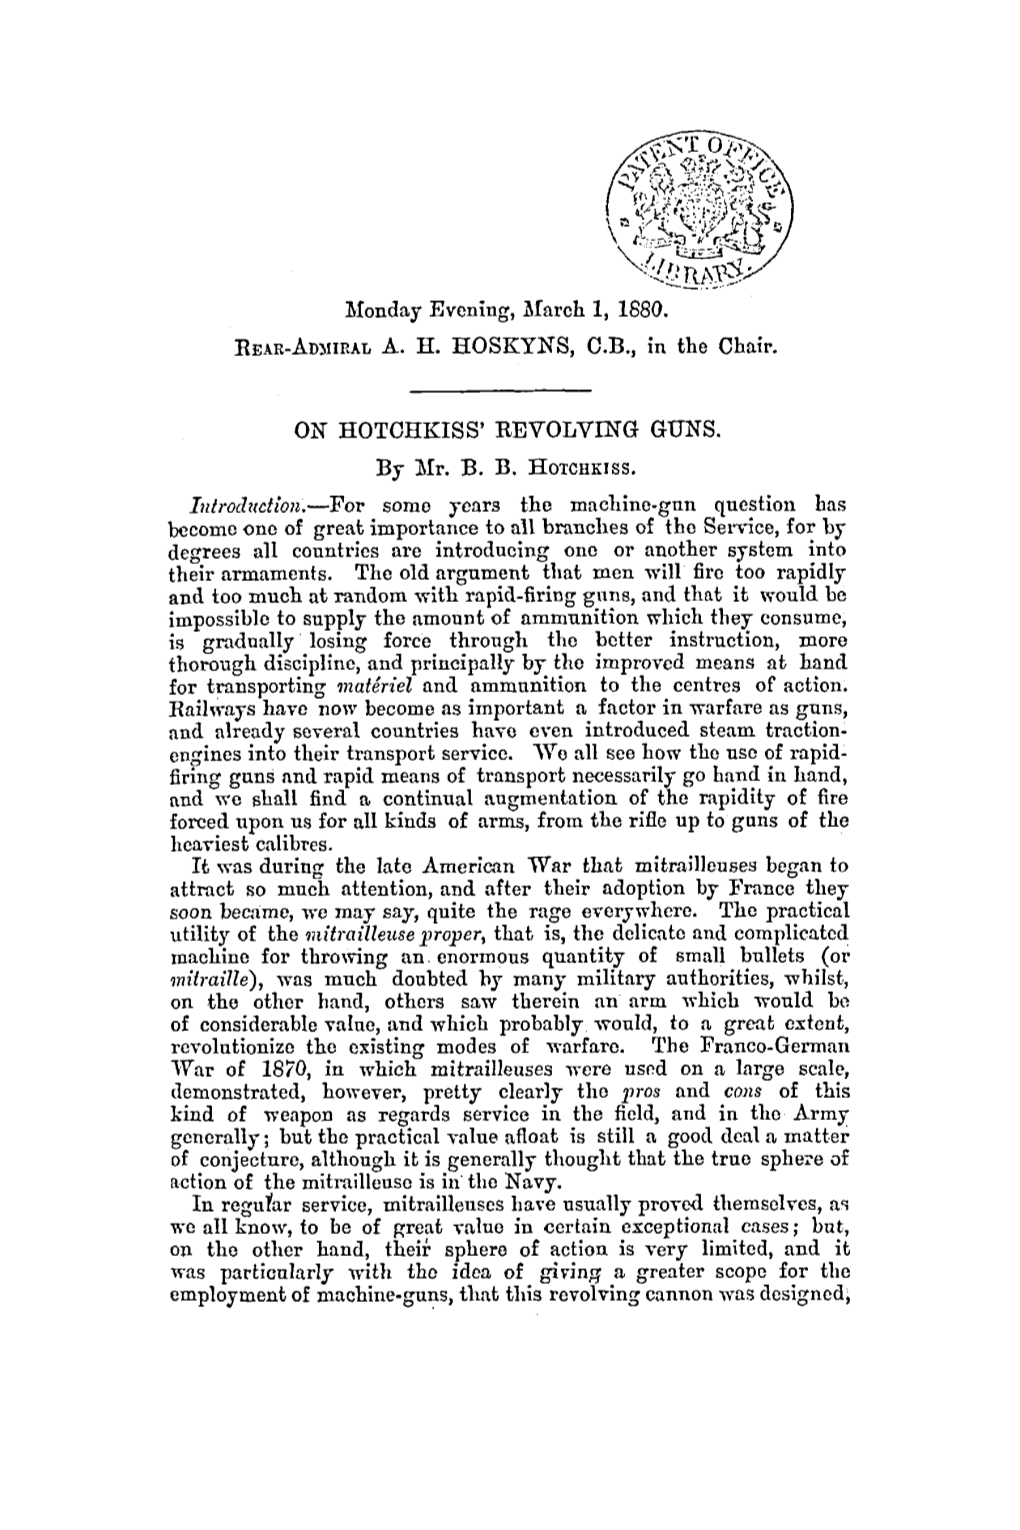 ON HOTCHKISS' REVOLVING GUNS. by 3Ir. B. B. HOTCFIKISS